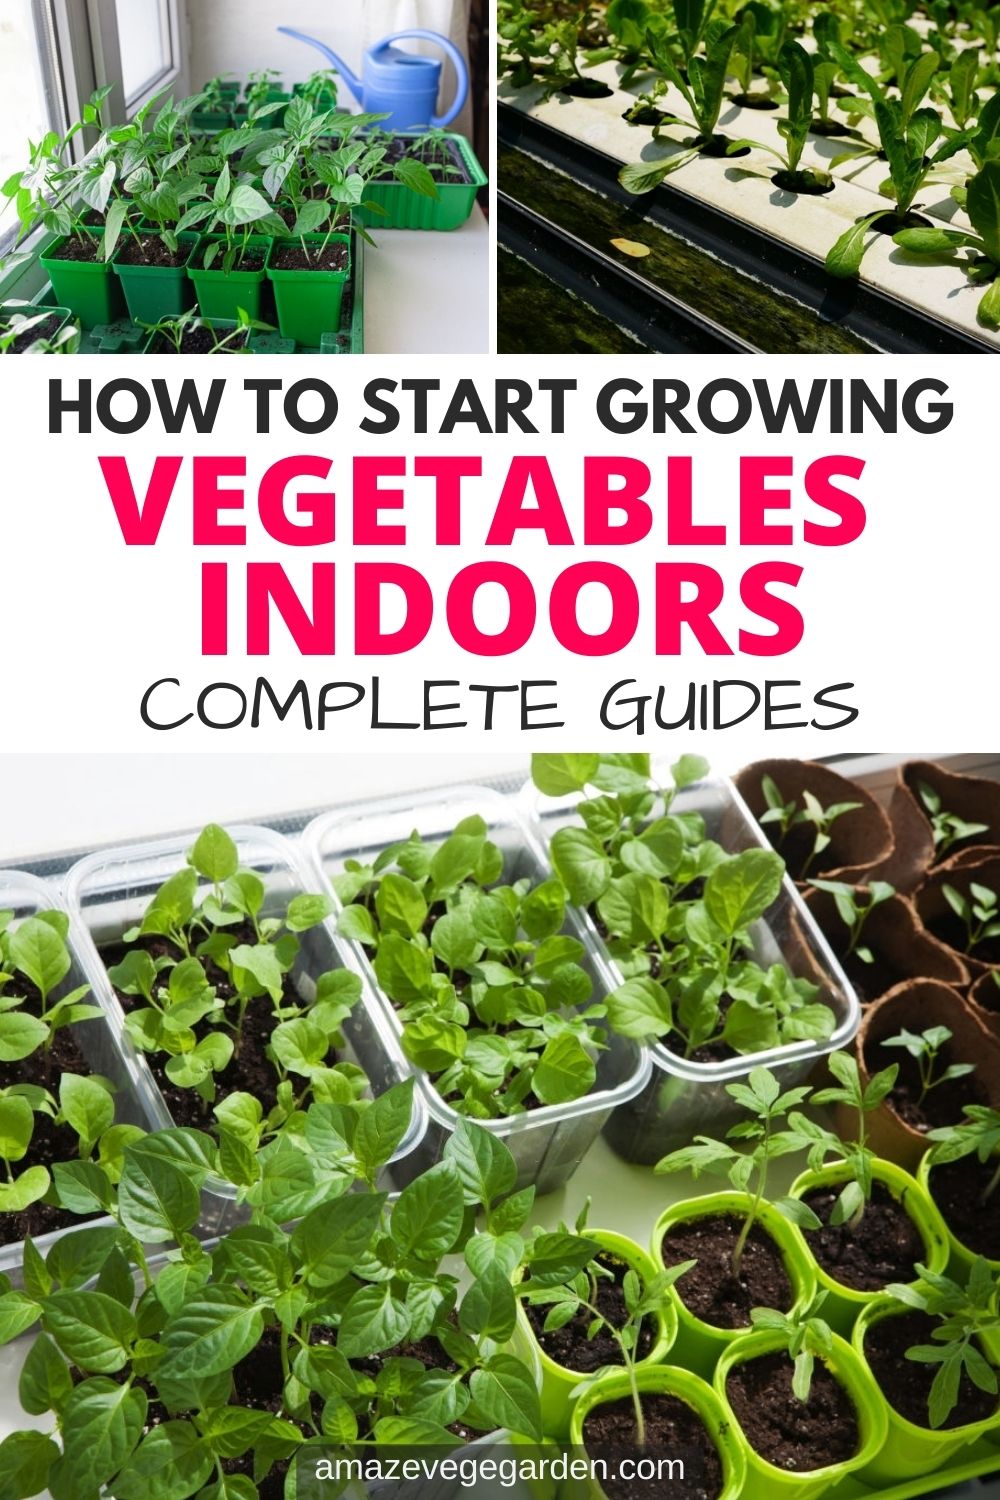 How to Start Growing Vegetables Indoors